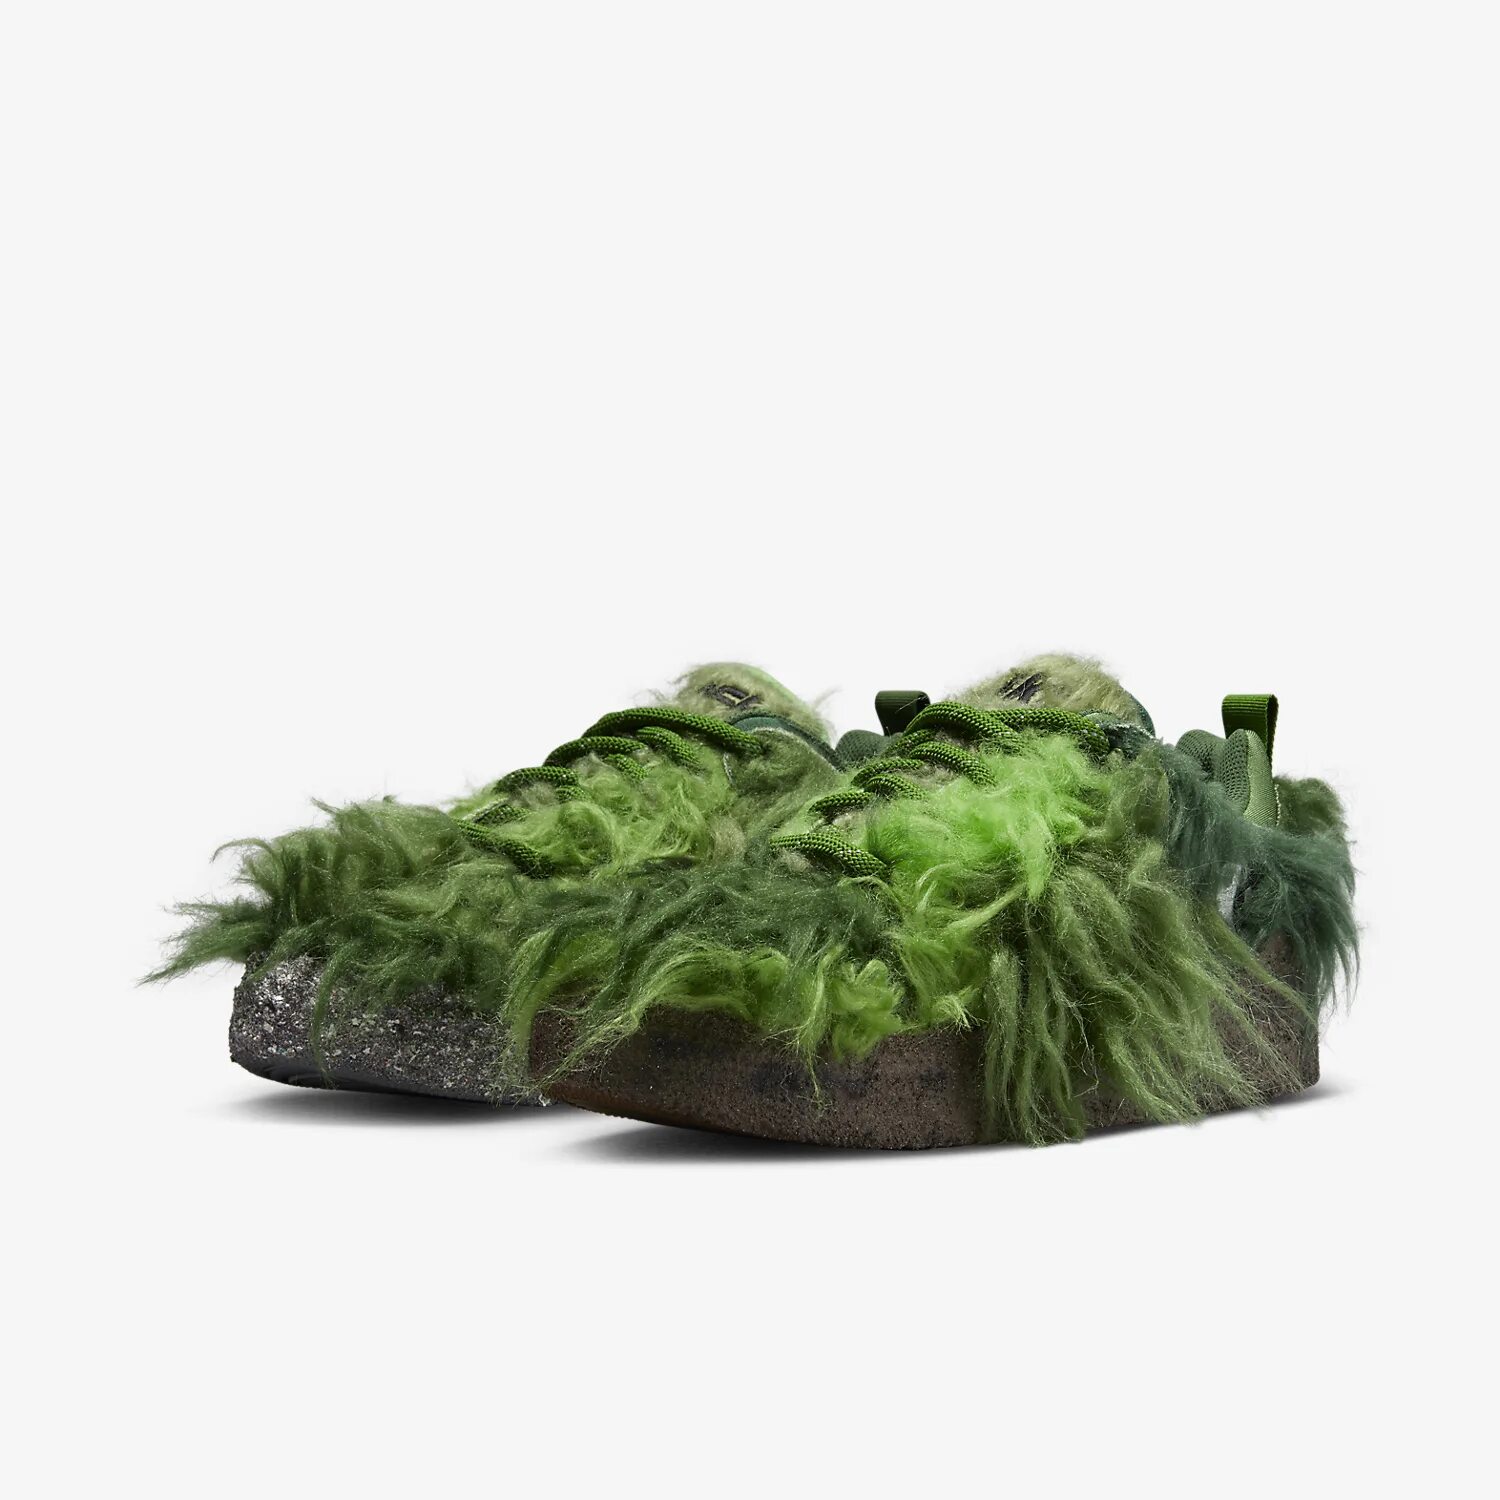 Nike plant flea market. Nike Flea 1 x Cactus. CPFM Flea 1. Кактус Плант Флеа Маркет. Cactus Plant Flea Market x Nike CPFM Flea 1 «Overgrown».